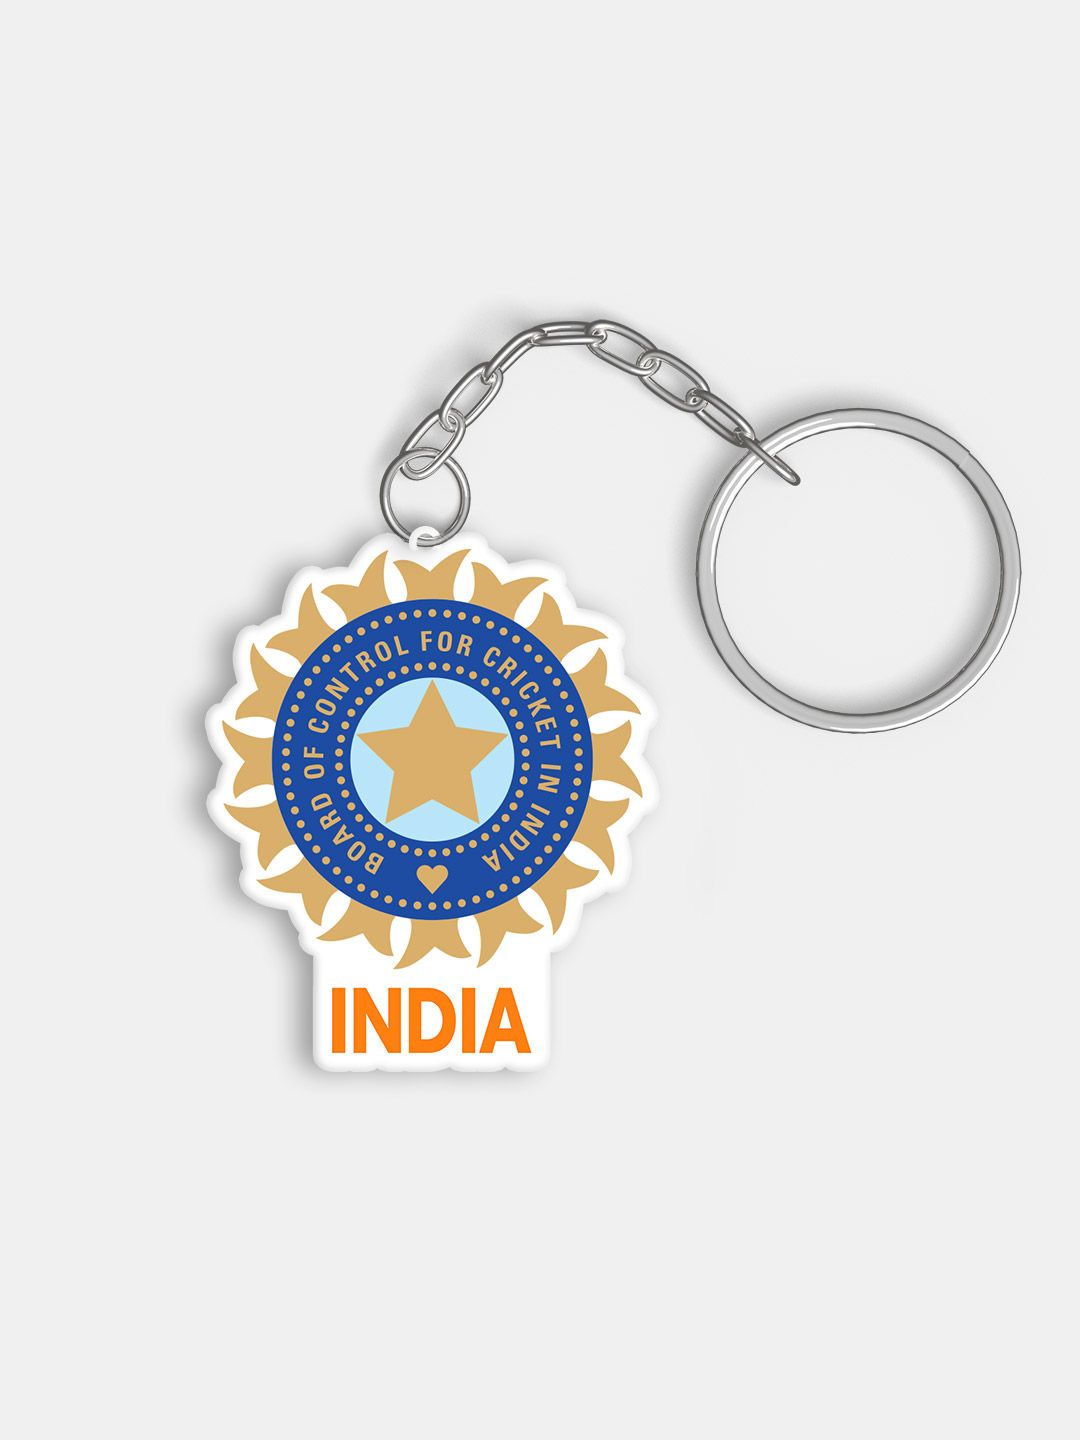 100+] Indian Cricket Team Logo Wallpapers | Wallpapers.com